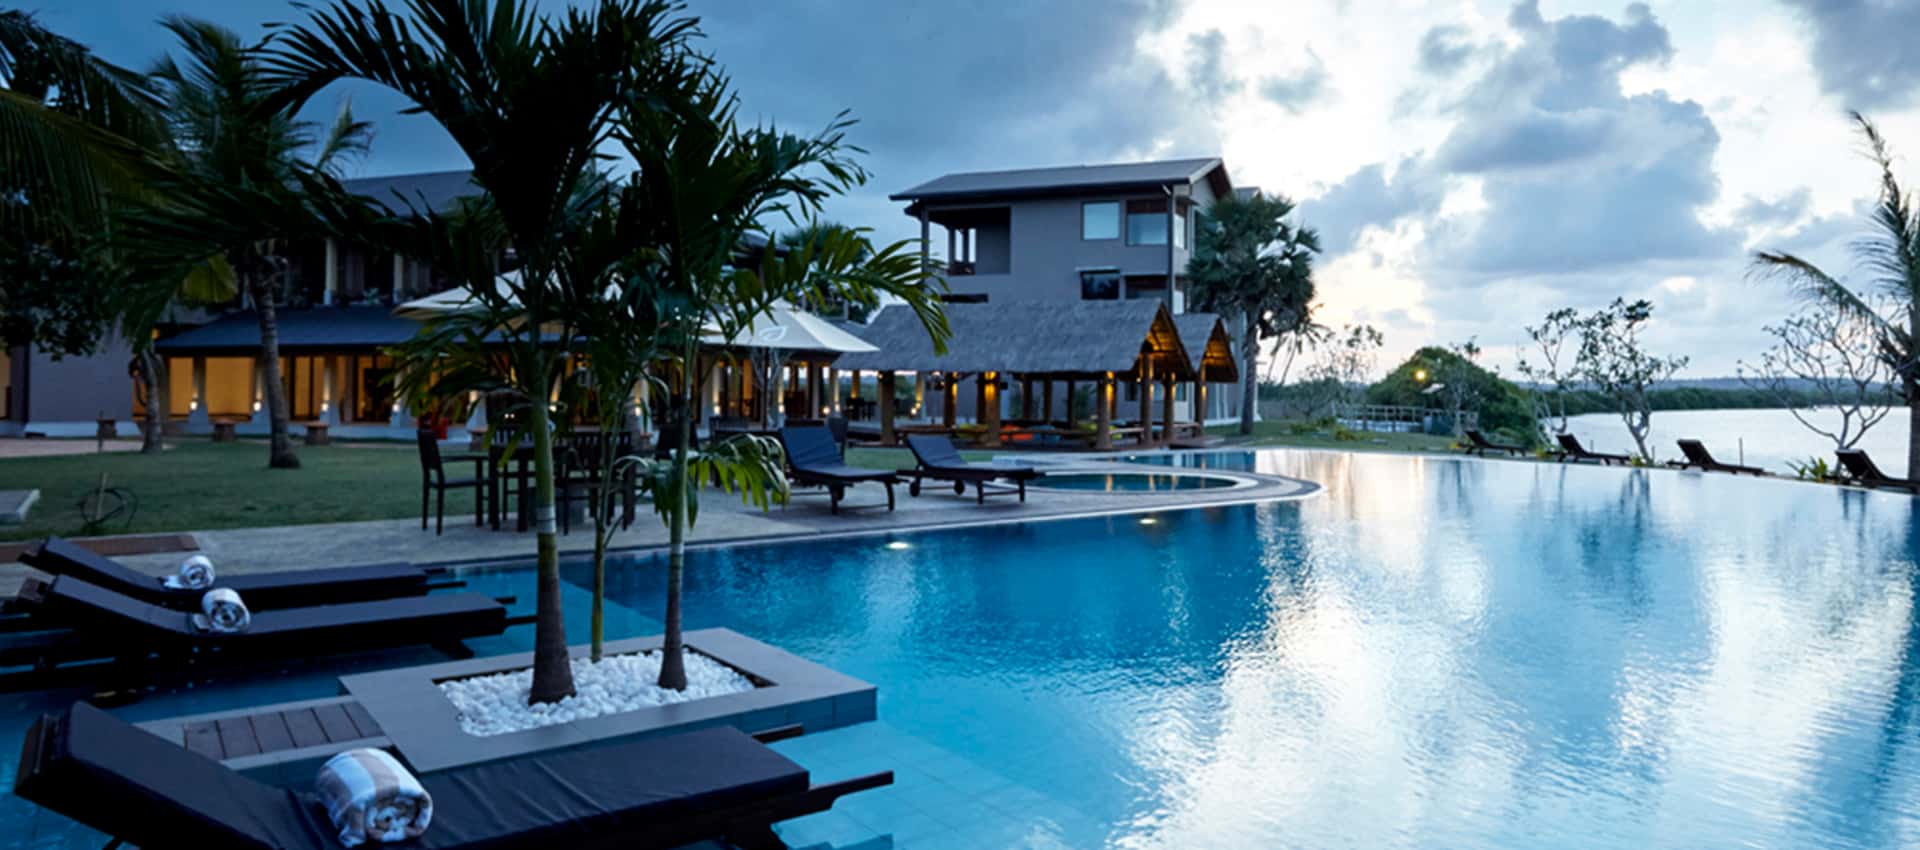 Amaranthe Bay Resort and Spa